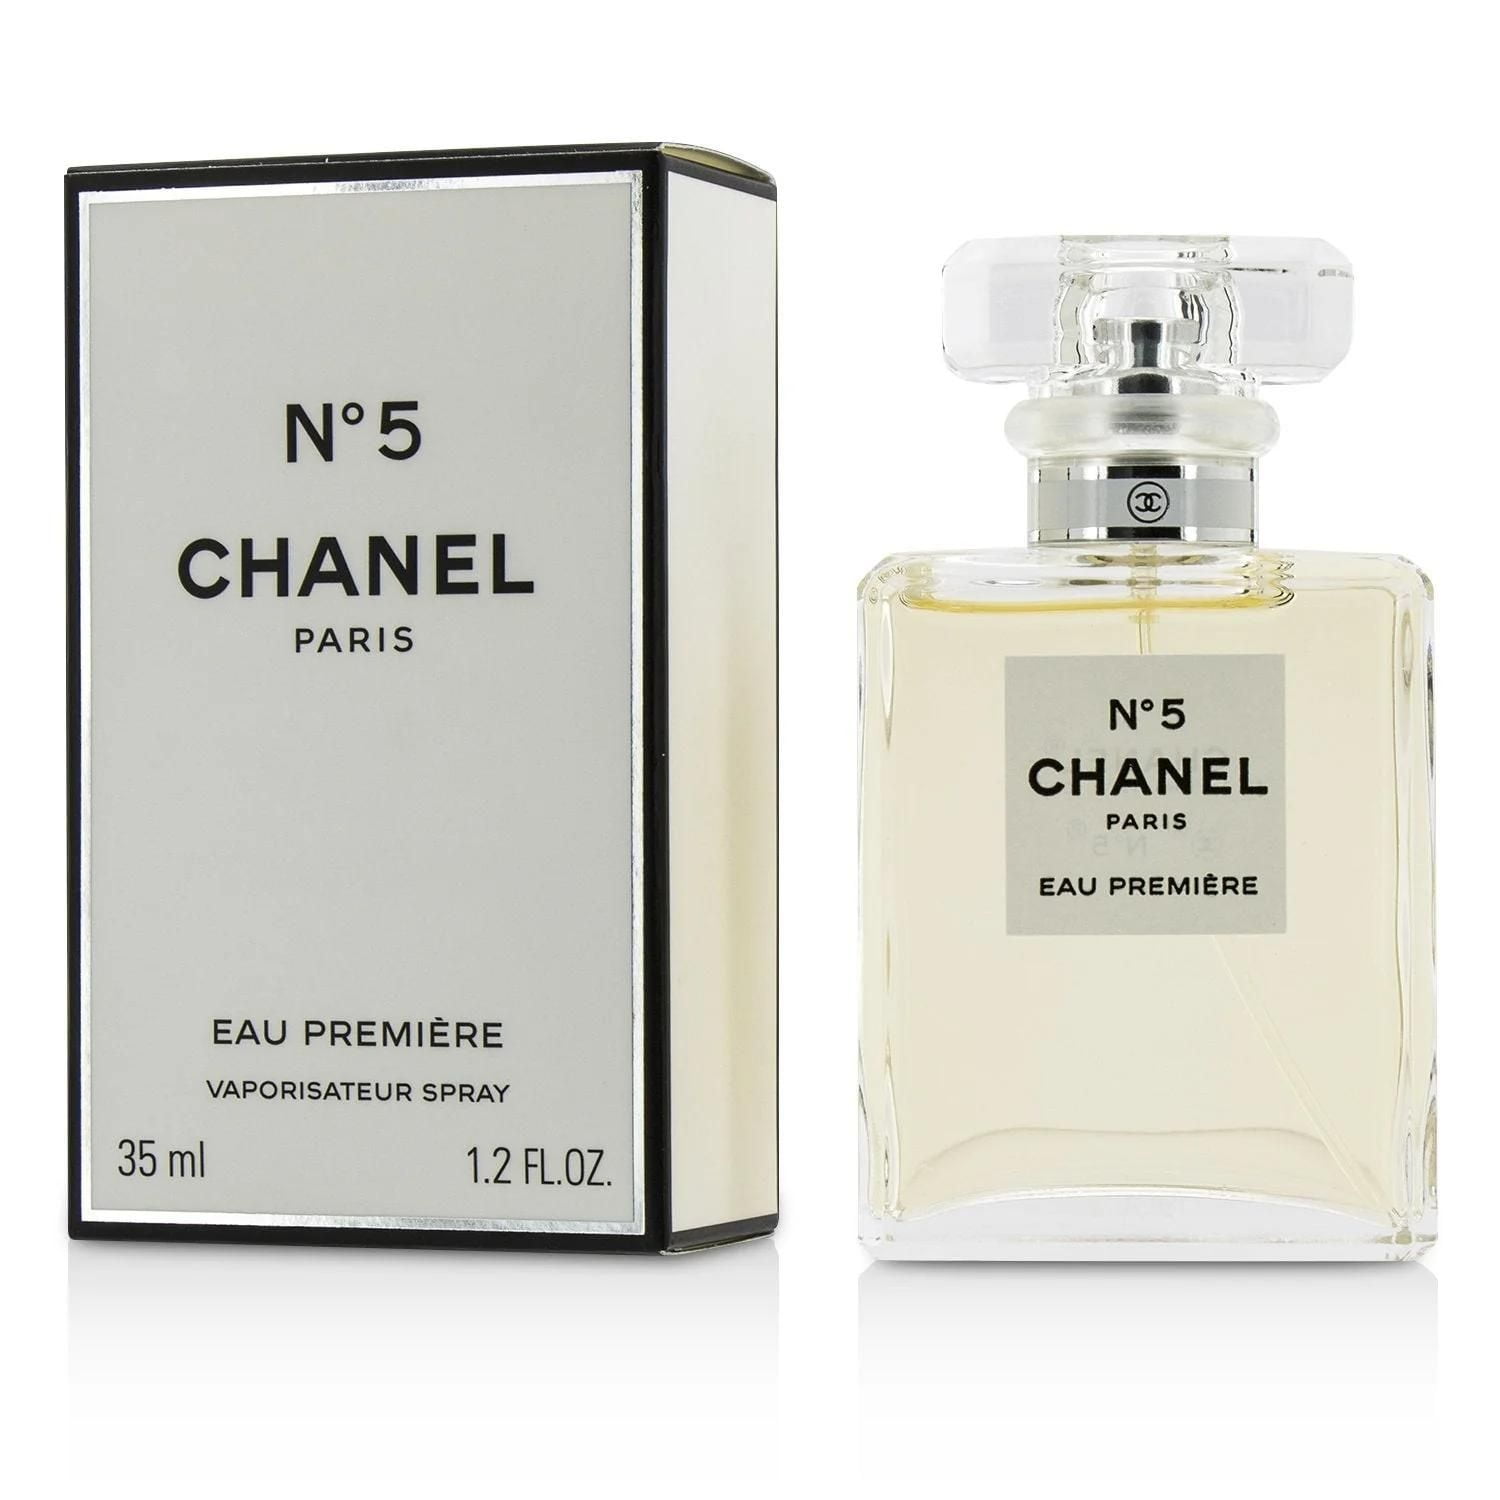 Chanel No 5 Paris Eau De Parfum EDP Spray 1.7oz 50 mL approx. 2% full w/box